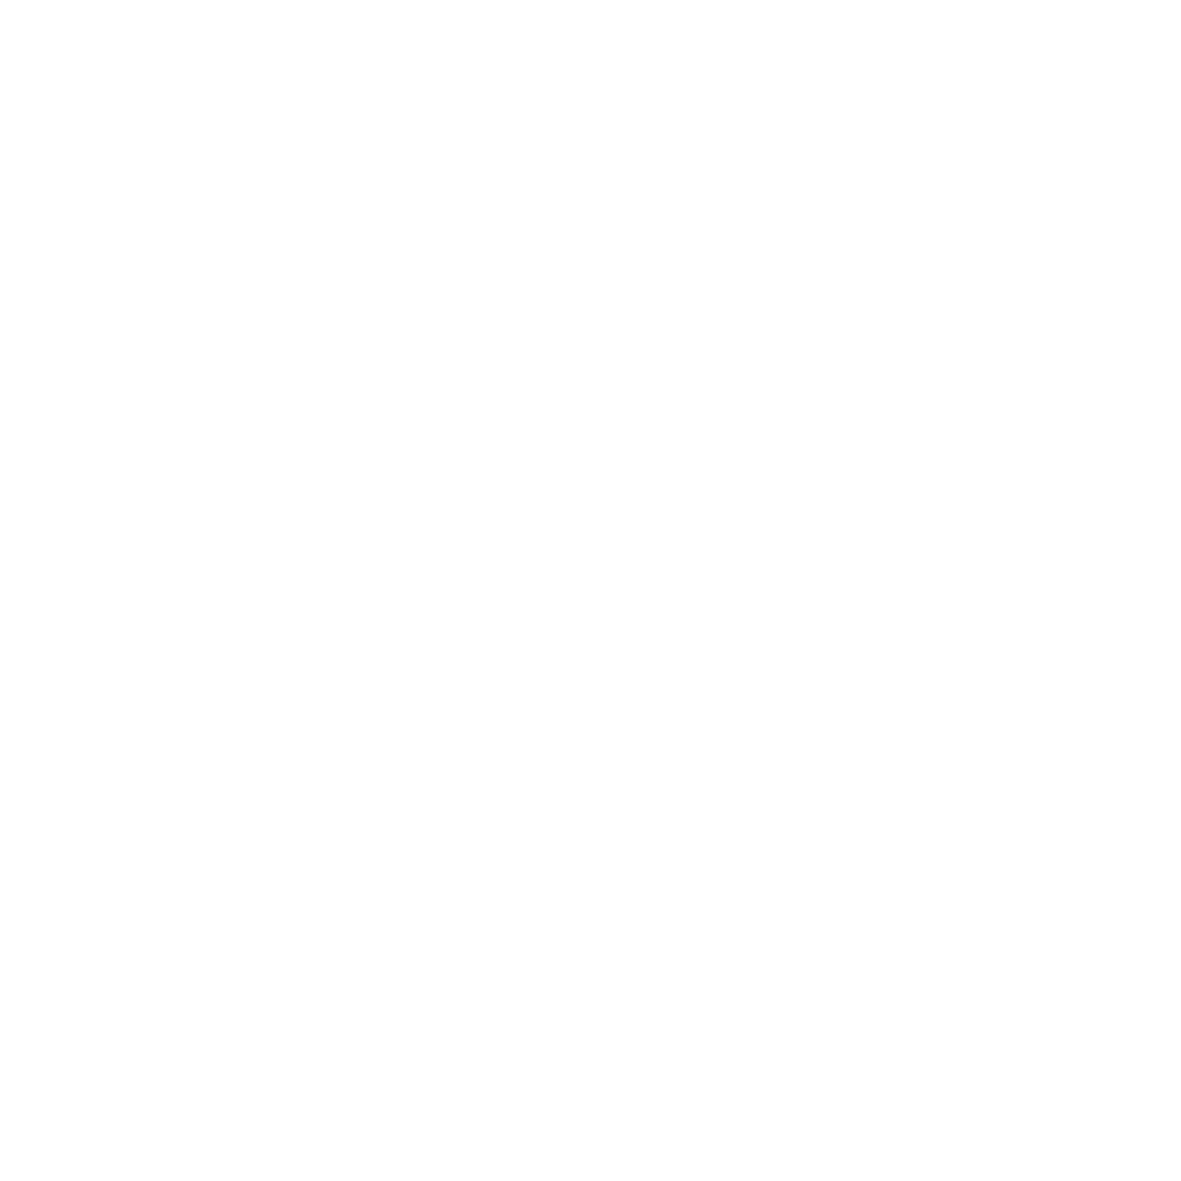 Clonable logo tumšs fons